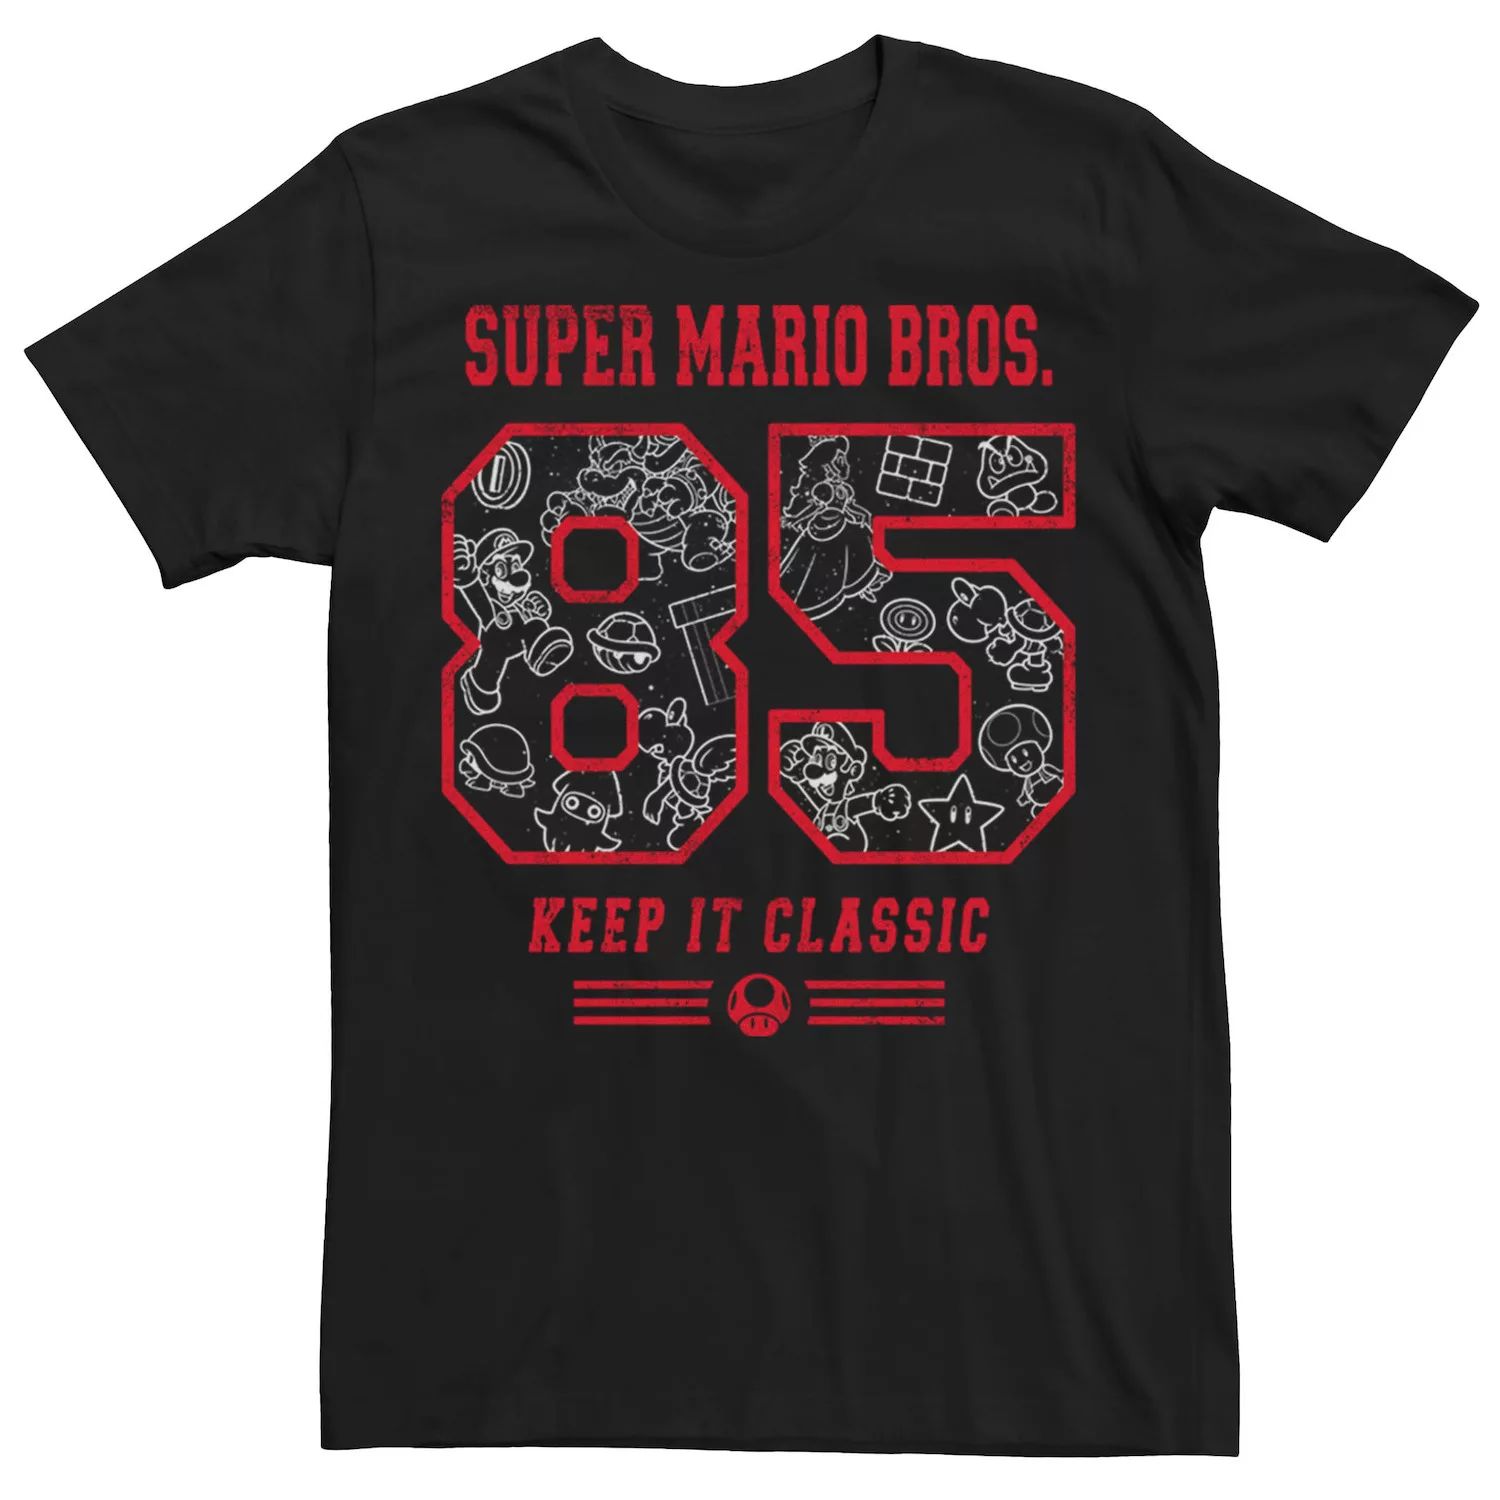 Мужская классическая футболка Super Mario 1985 Fill Keep It Licensed Character мужская классическая раскрашенная футболка nintendo super mario keep it licensed character